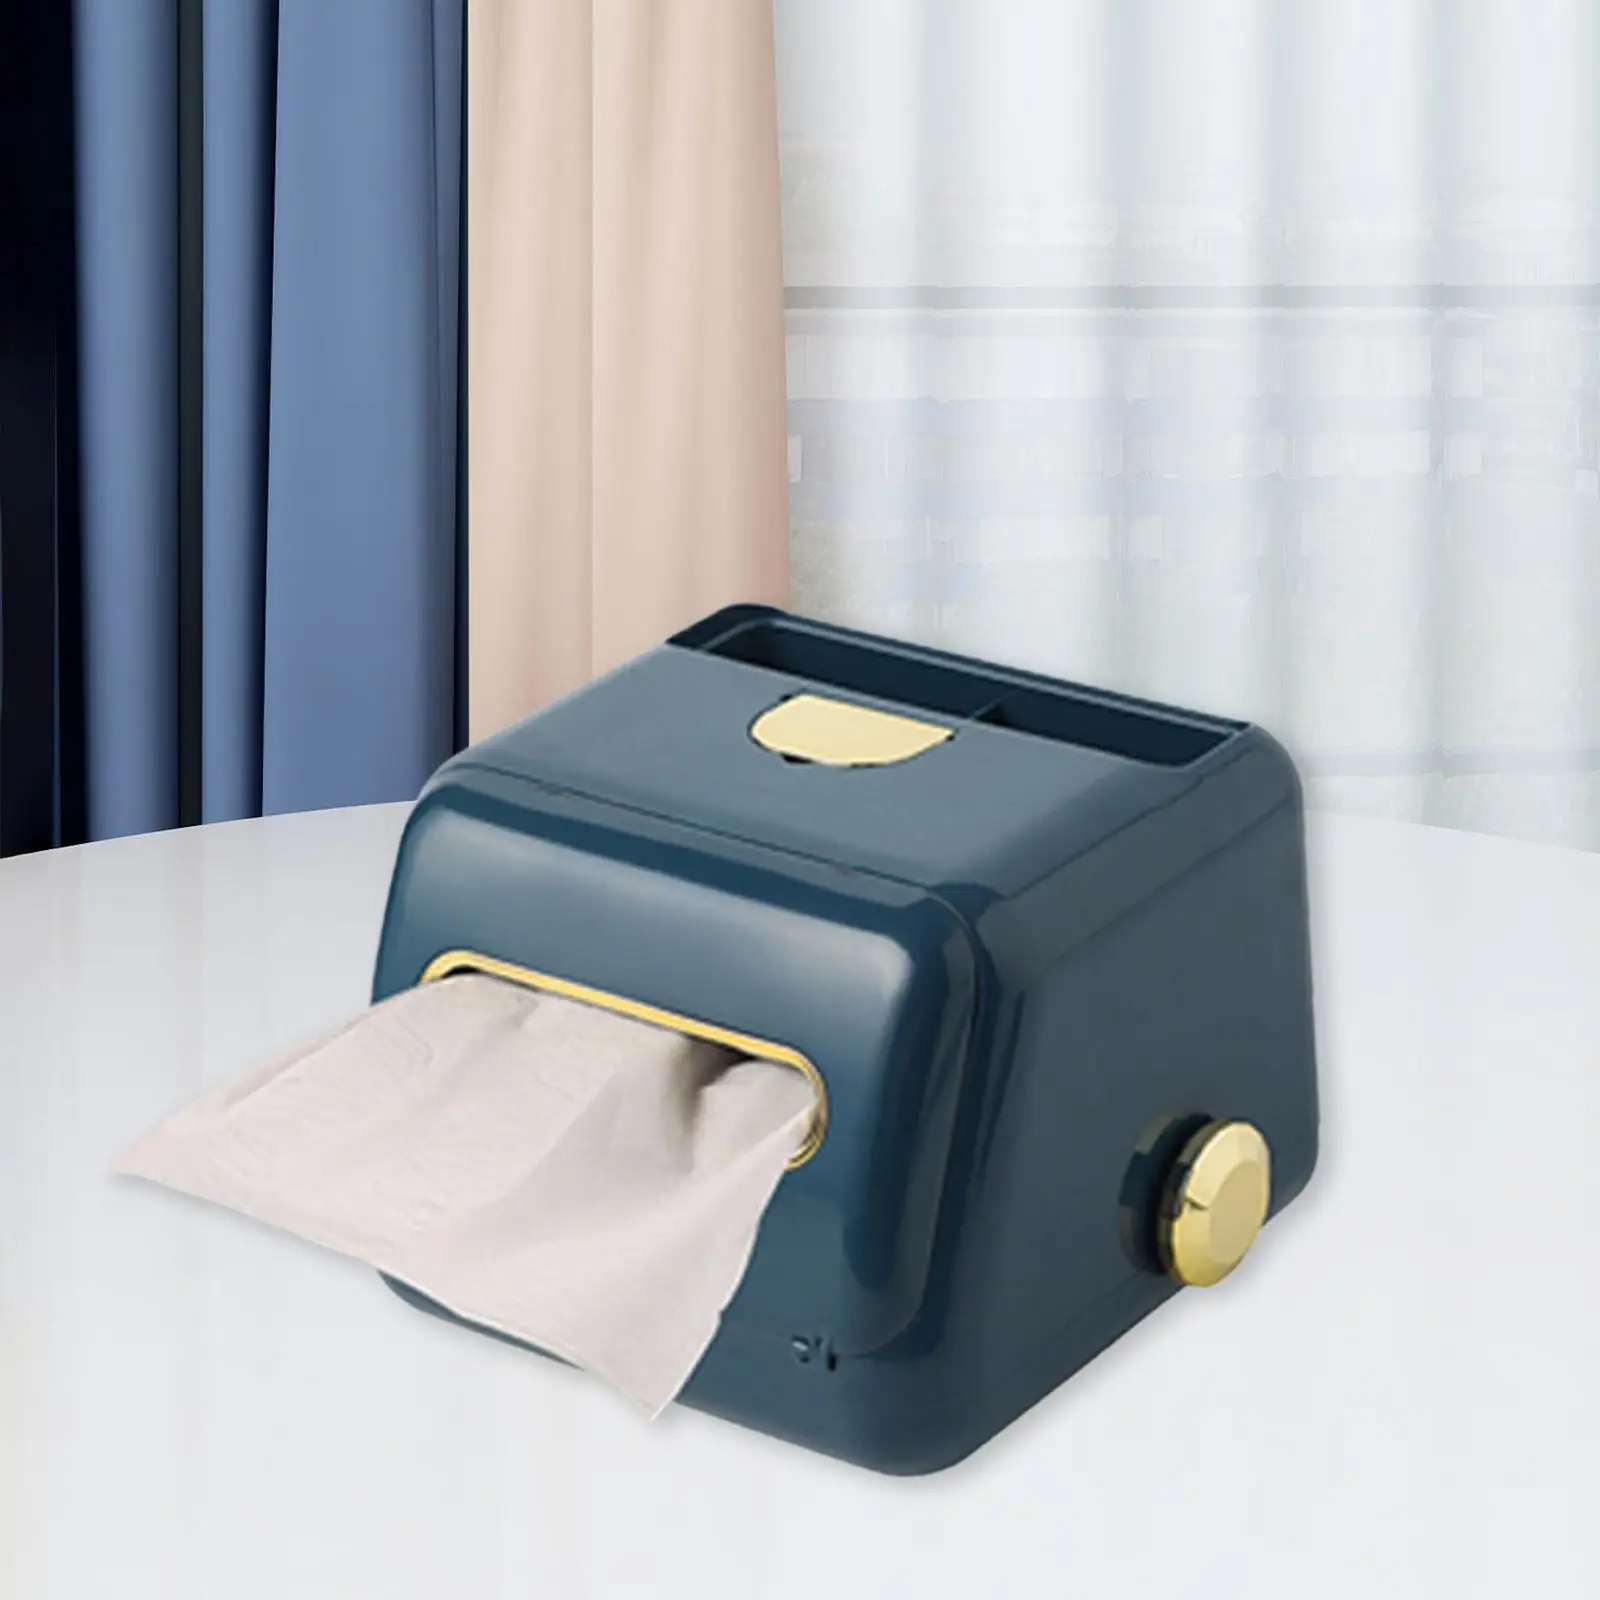 Multifunctional Tissue Box Holder Desk Organizer Tissue Dispenser with Spring Tissue Cover for Restaurant Office Hotel Kitchen